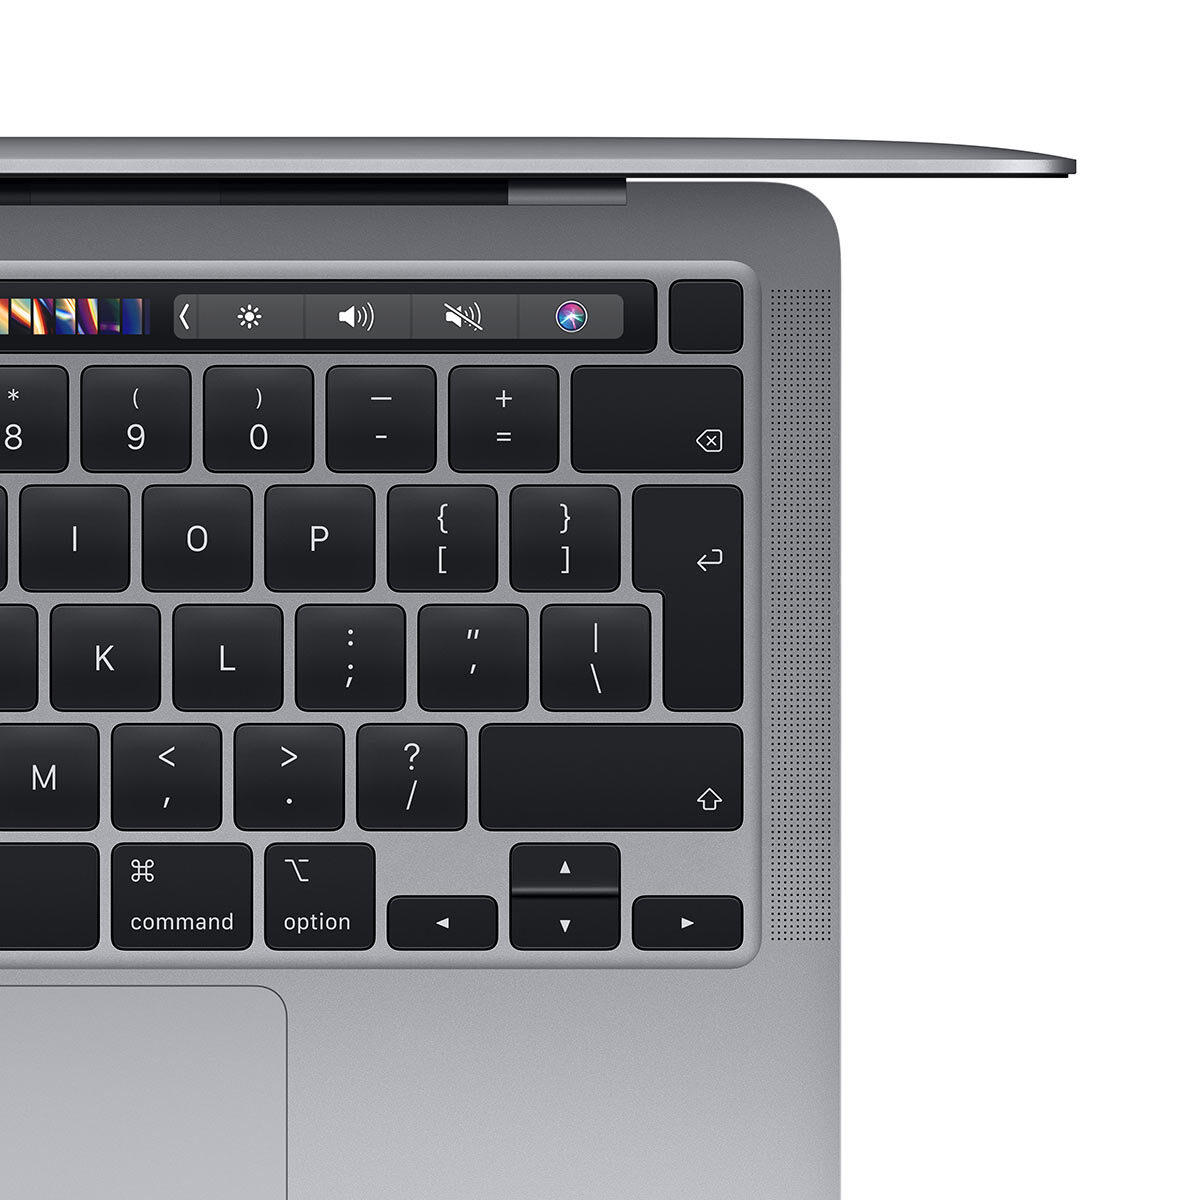 Buy Apple MacBook Pro 2020, Apple M1 Chip, 16GB RAM, 2TB SSD, 13.3 Inch in Space Grey, Z11B2000780091 at costco.co.uk